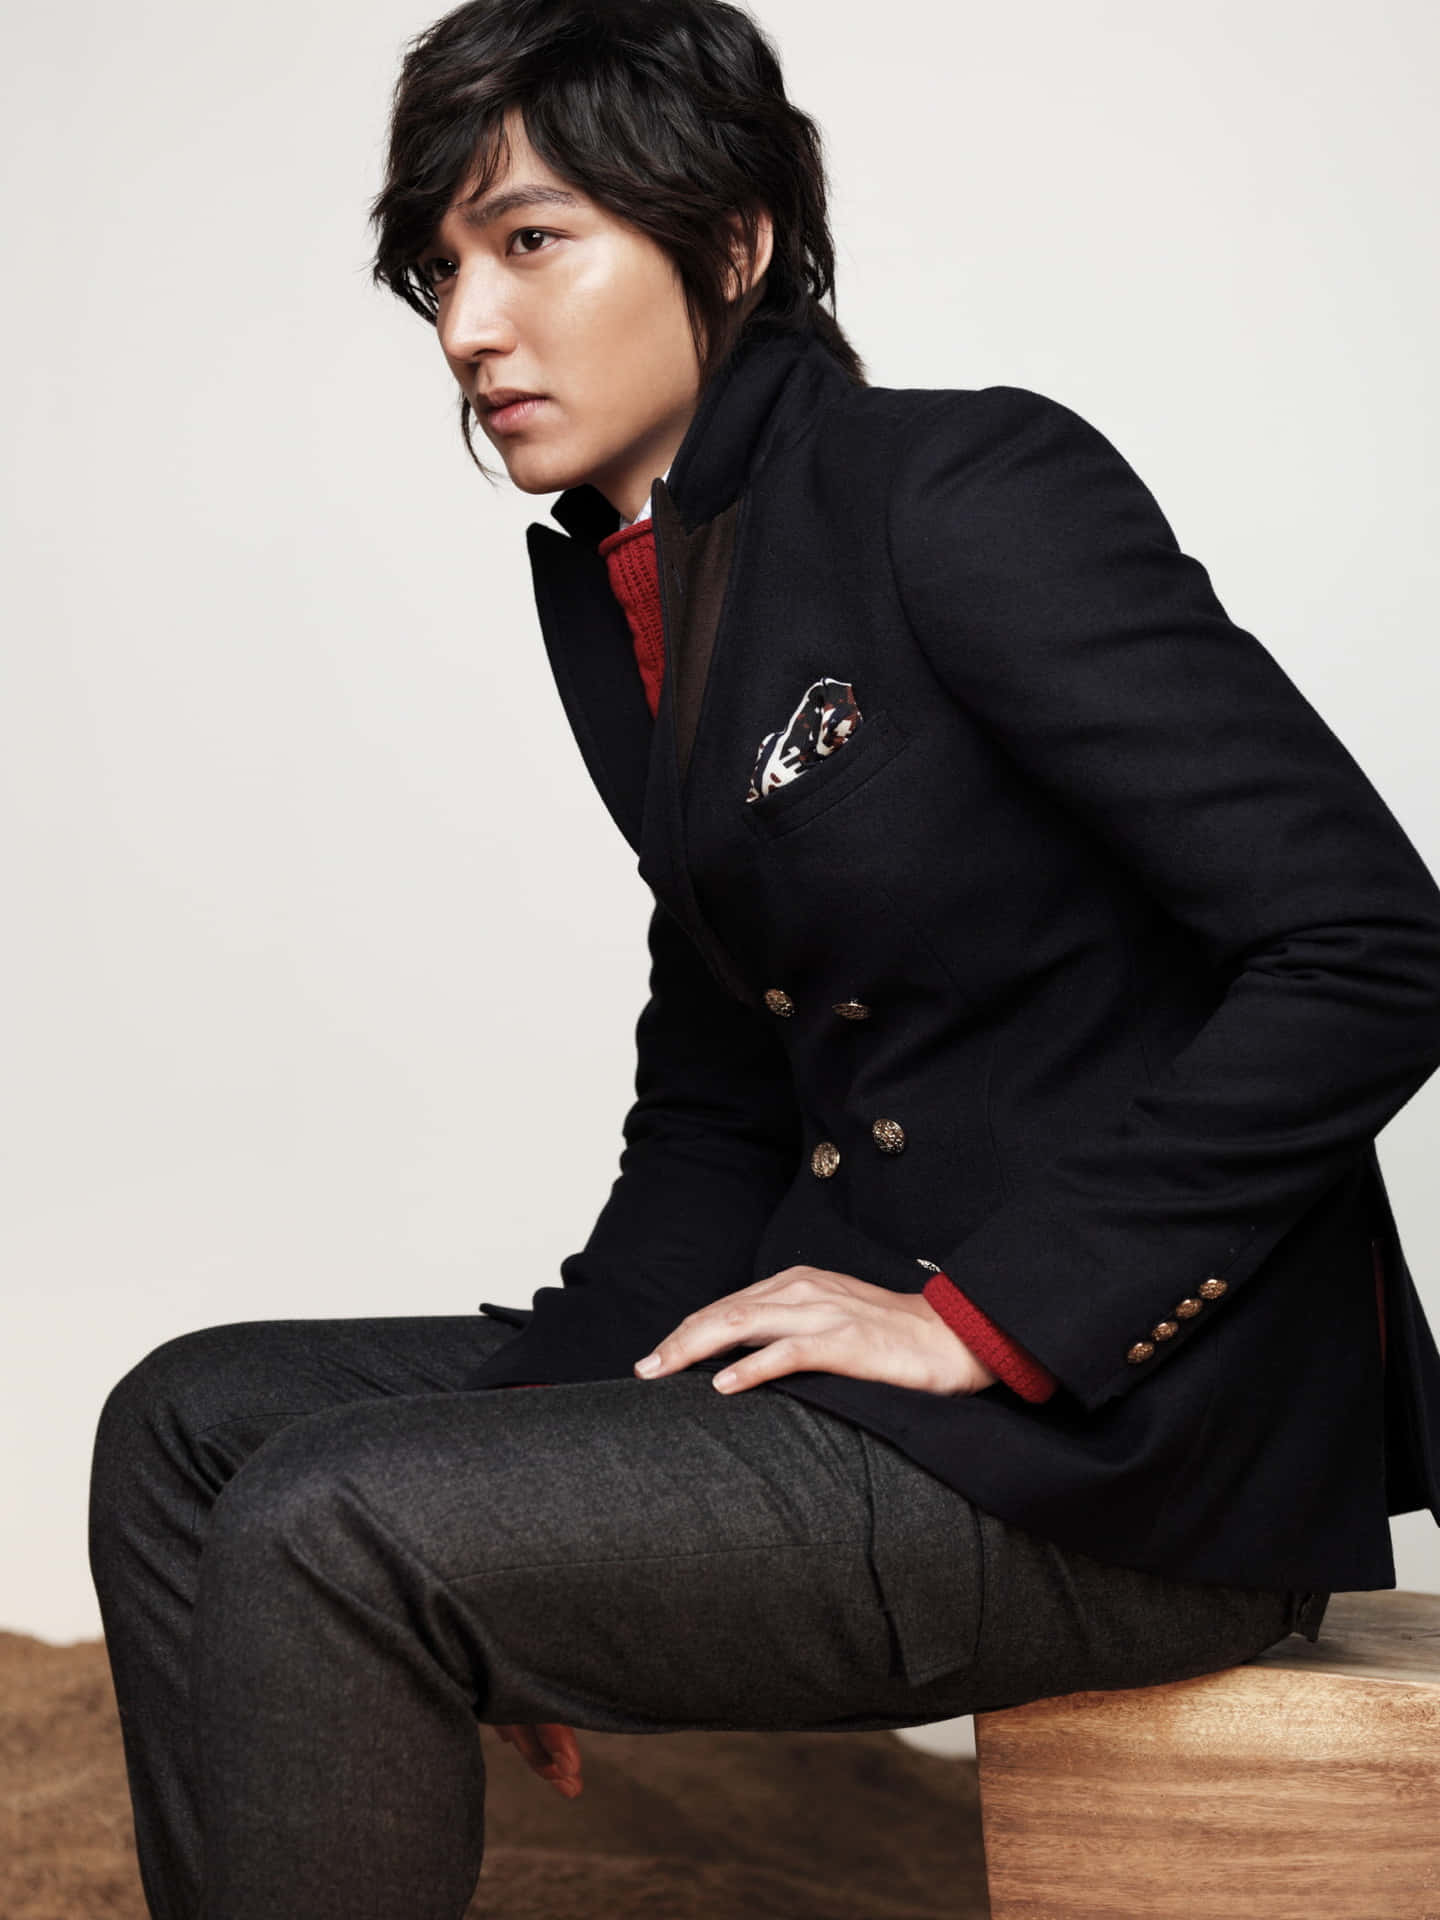 Lee Min Ho Men's Fashion Background